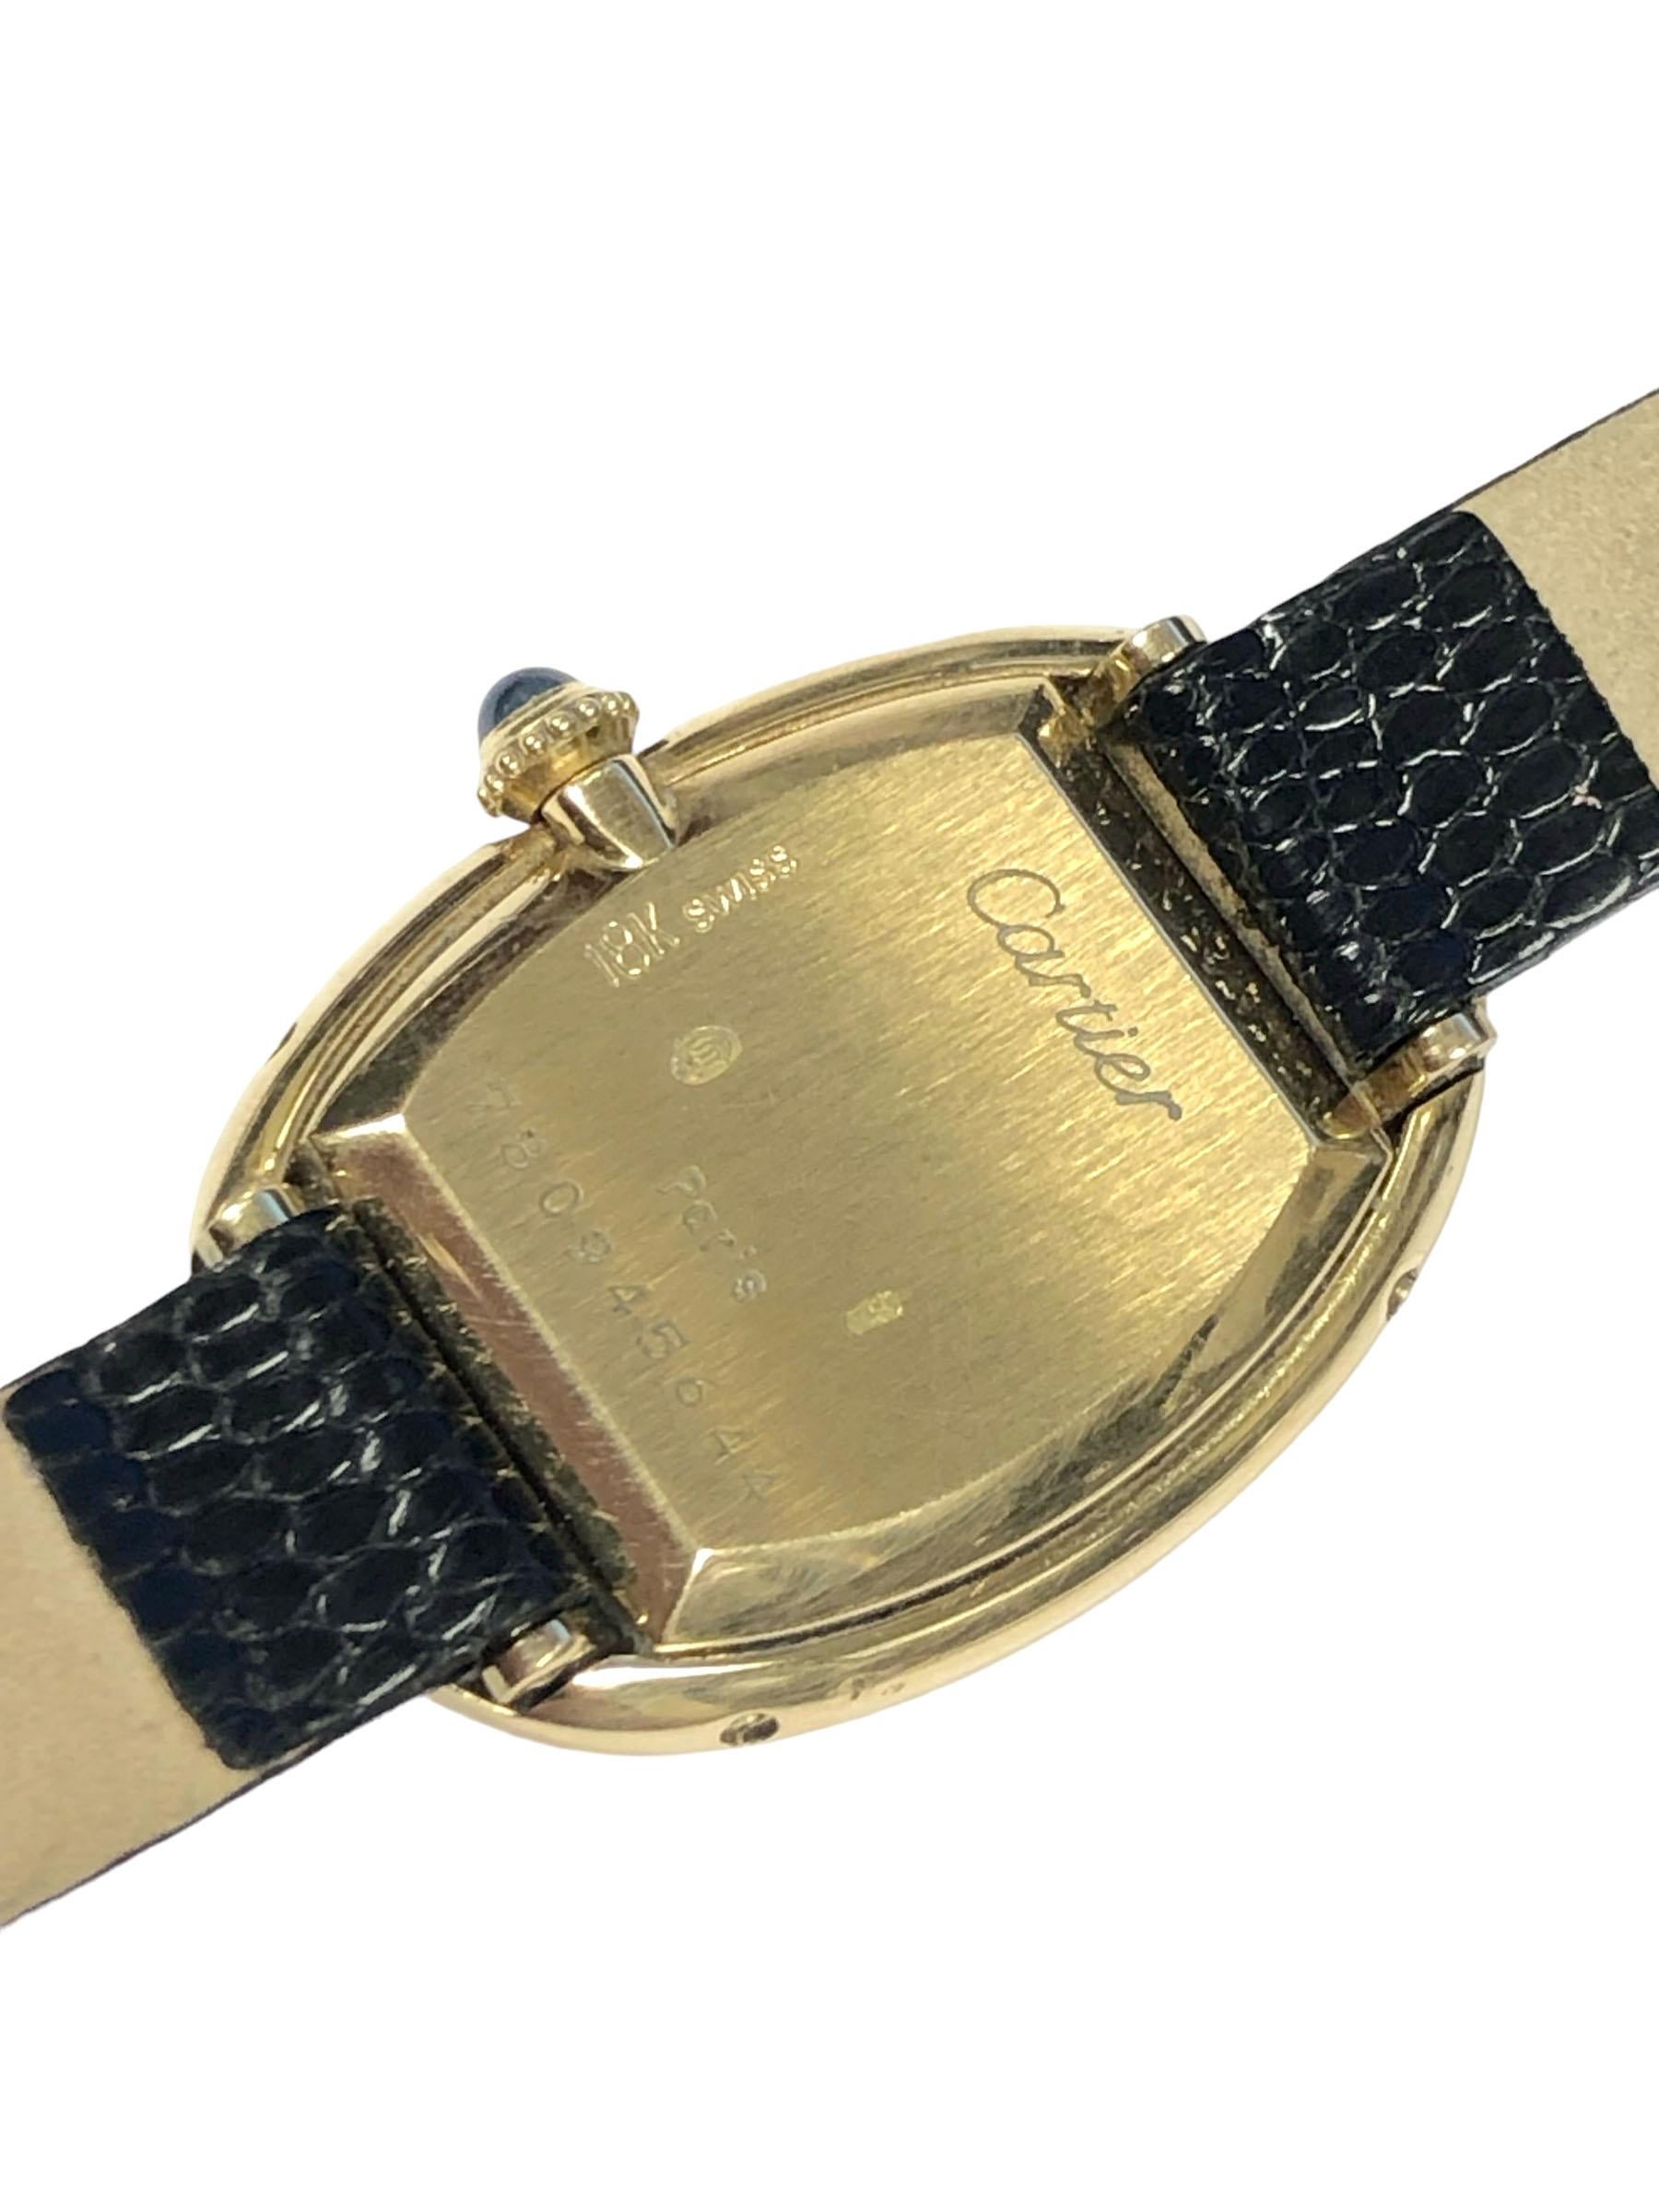 Women's Cartier Baignoire Ladies Yellow Gold Mechanical Wrist Watch